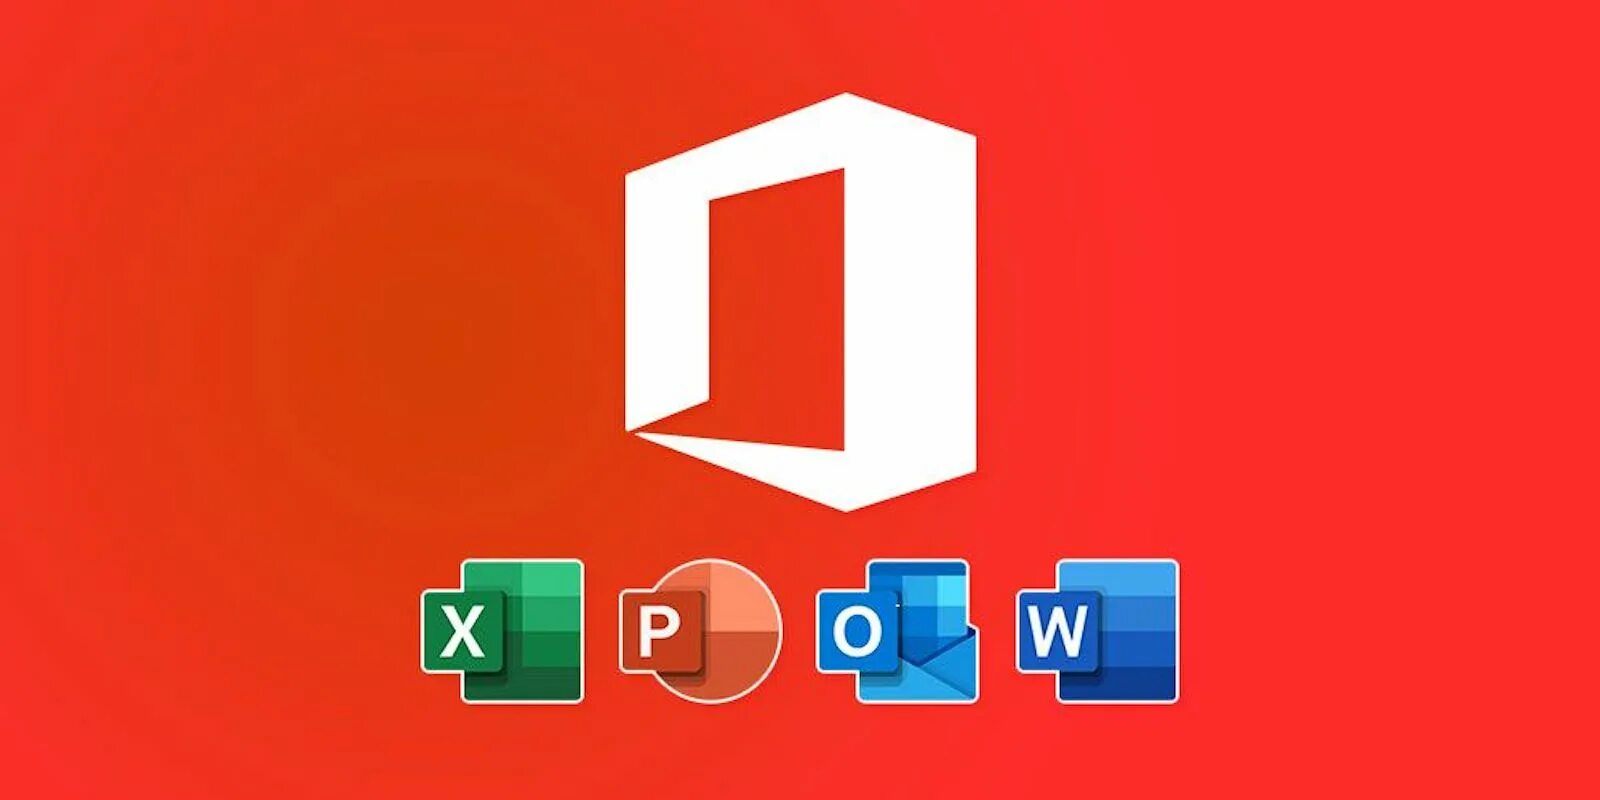 Микрософт офис 2021. Microsoft Office 2021. Майкрософт офис последняя версия 2021. Microsoft Office 2021 for Mac. Логотип MS Office 2021.